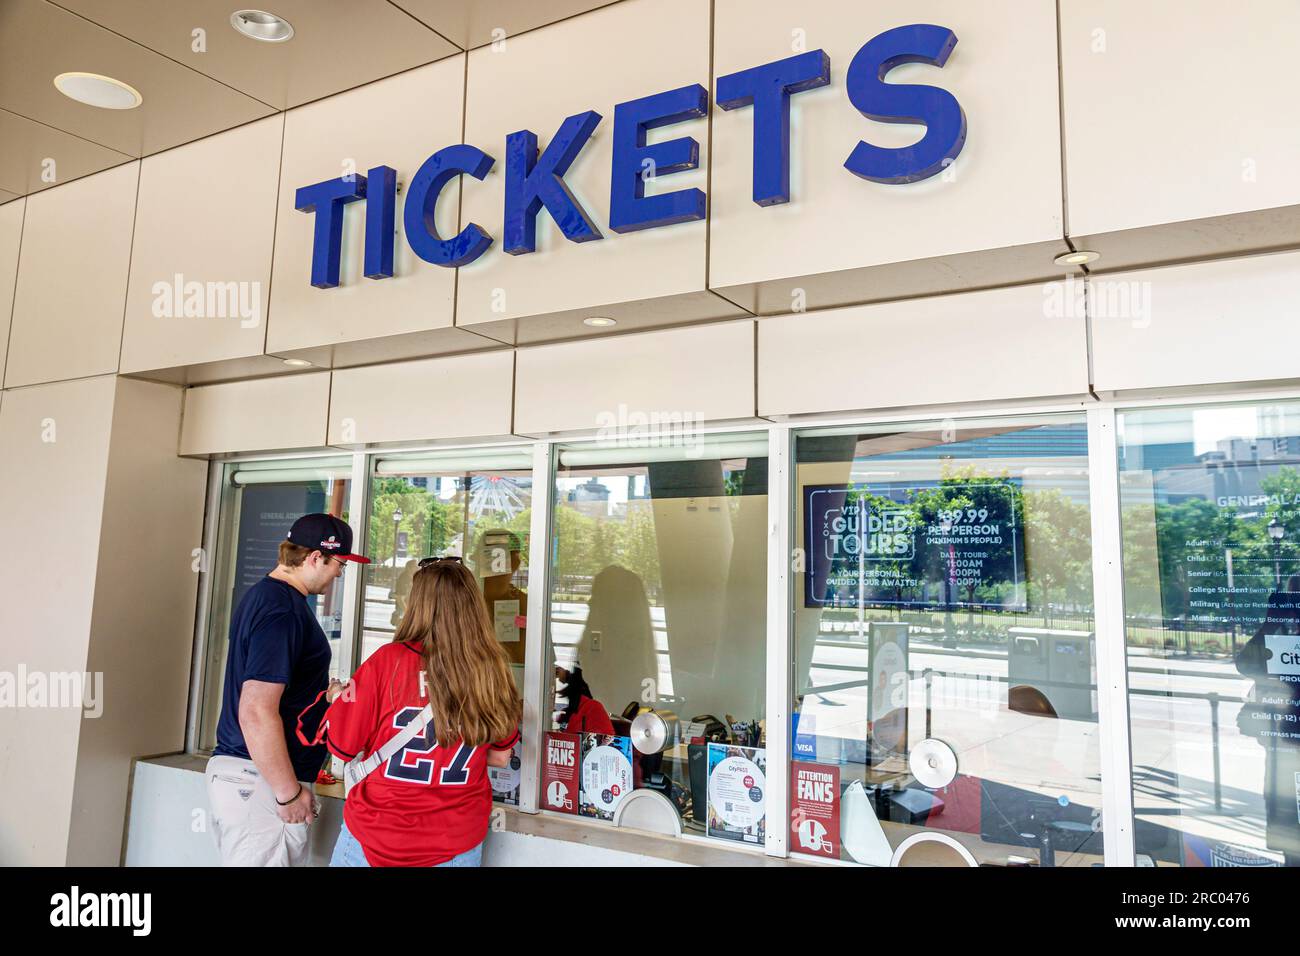 Atlanta Georgia,College Football Hall of Fame,tickets ticket window,couple purchasing buying Stock Photo